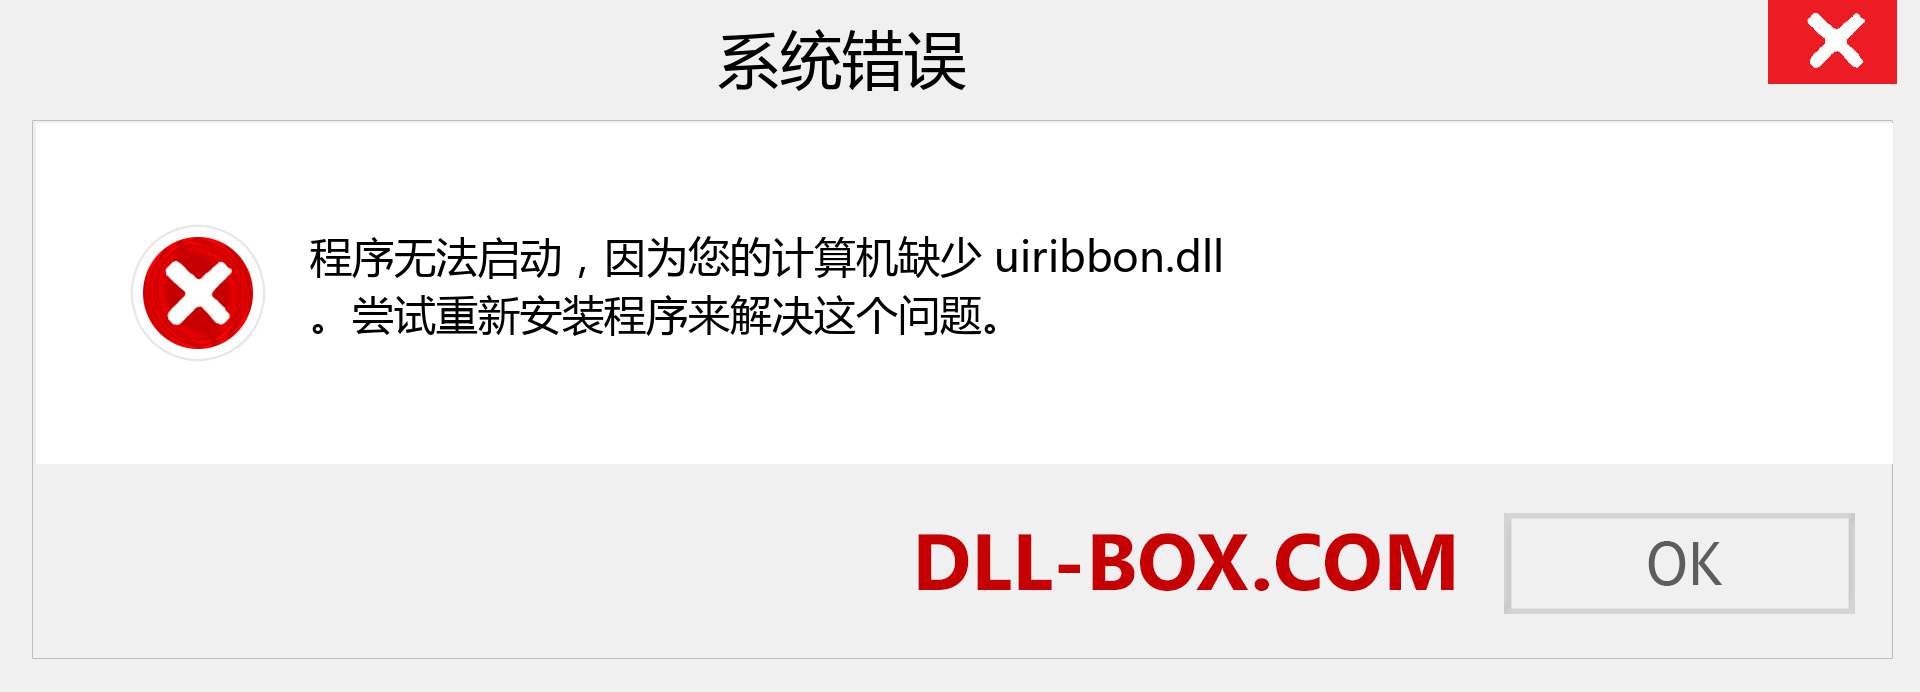 uiribbon.dll 文件丢失？。 适用于 Windows 7、8、10 的下载 - 修复 Windows、照片、图像上的 uiribbon dll 丢失错误